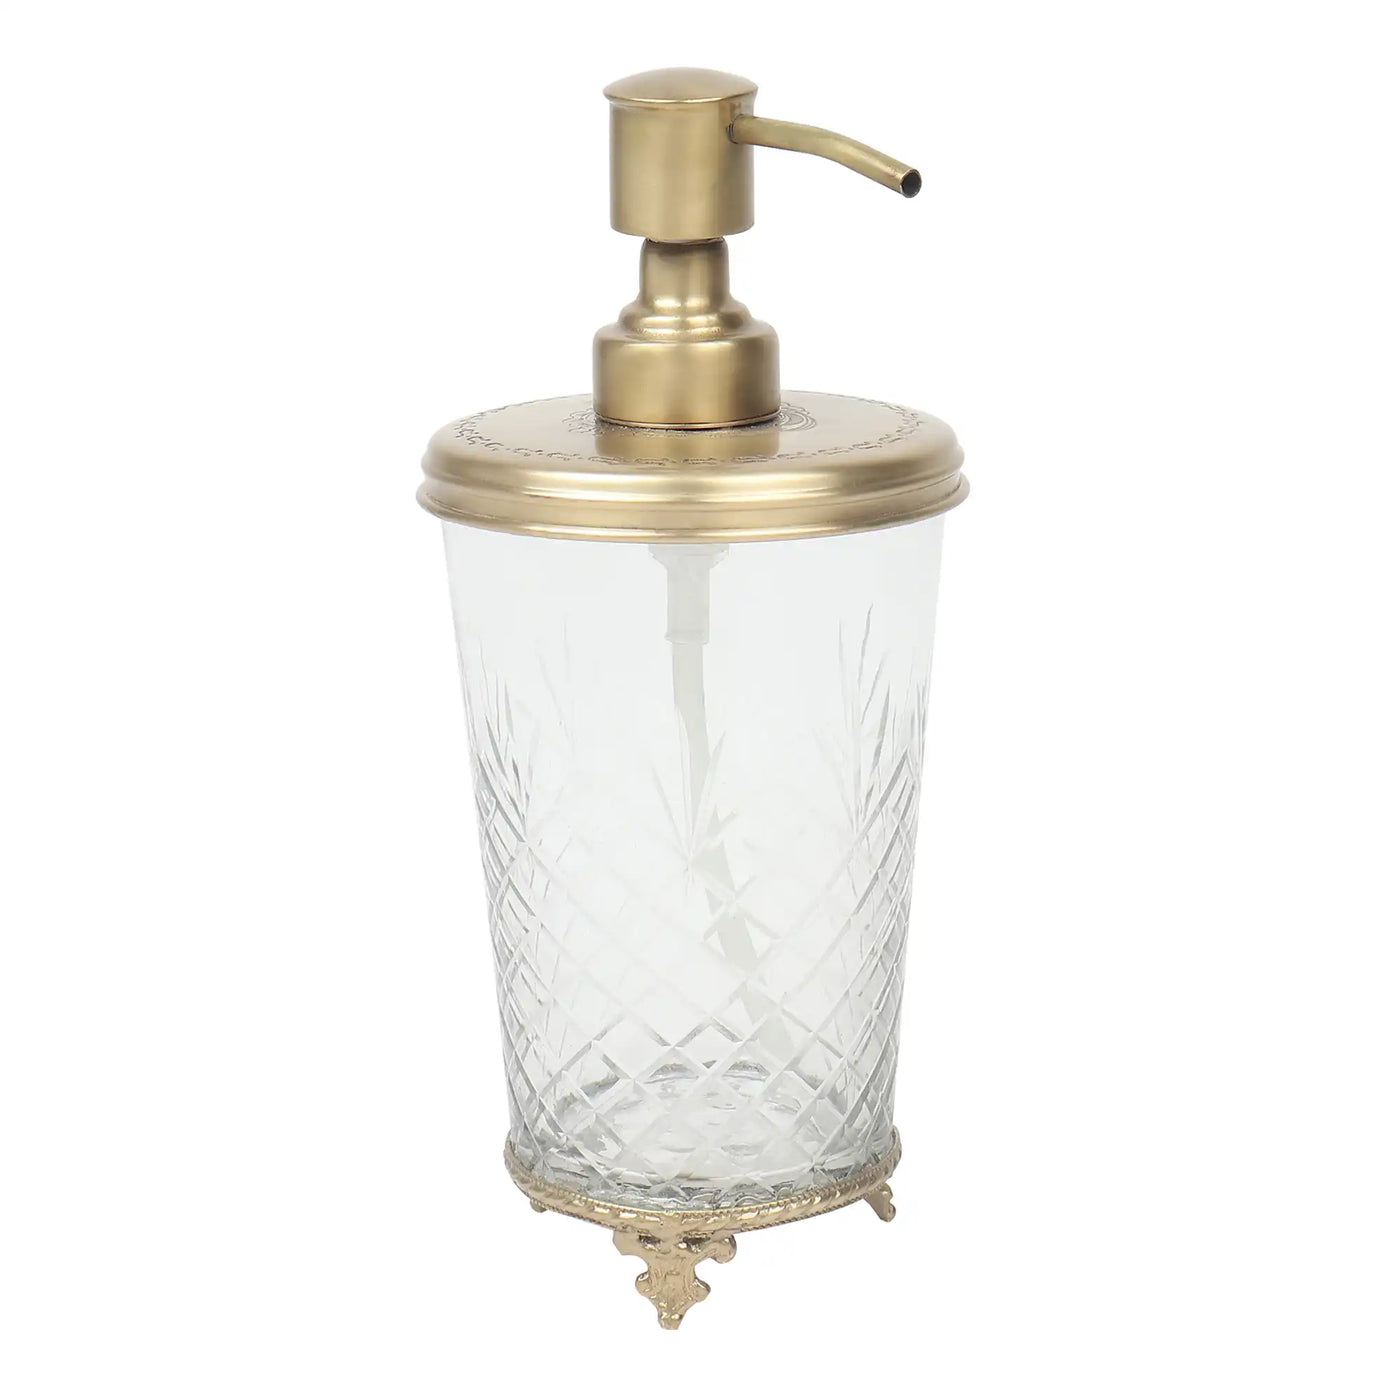 Vintage Brass & Glass Soap Dispenser Gold 80-047-21